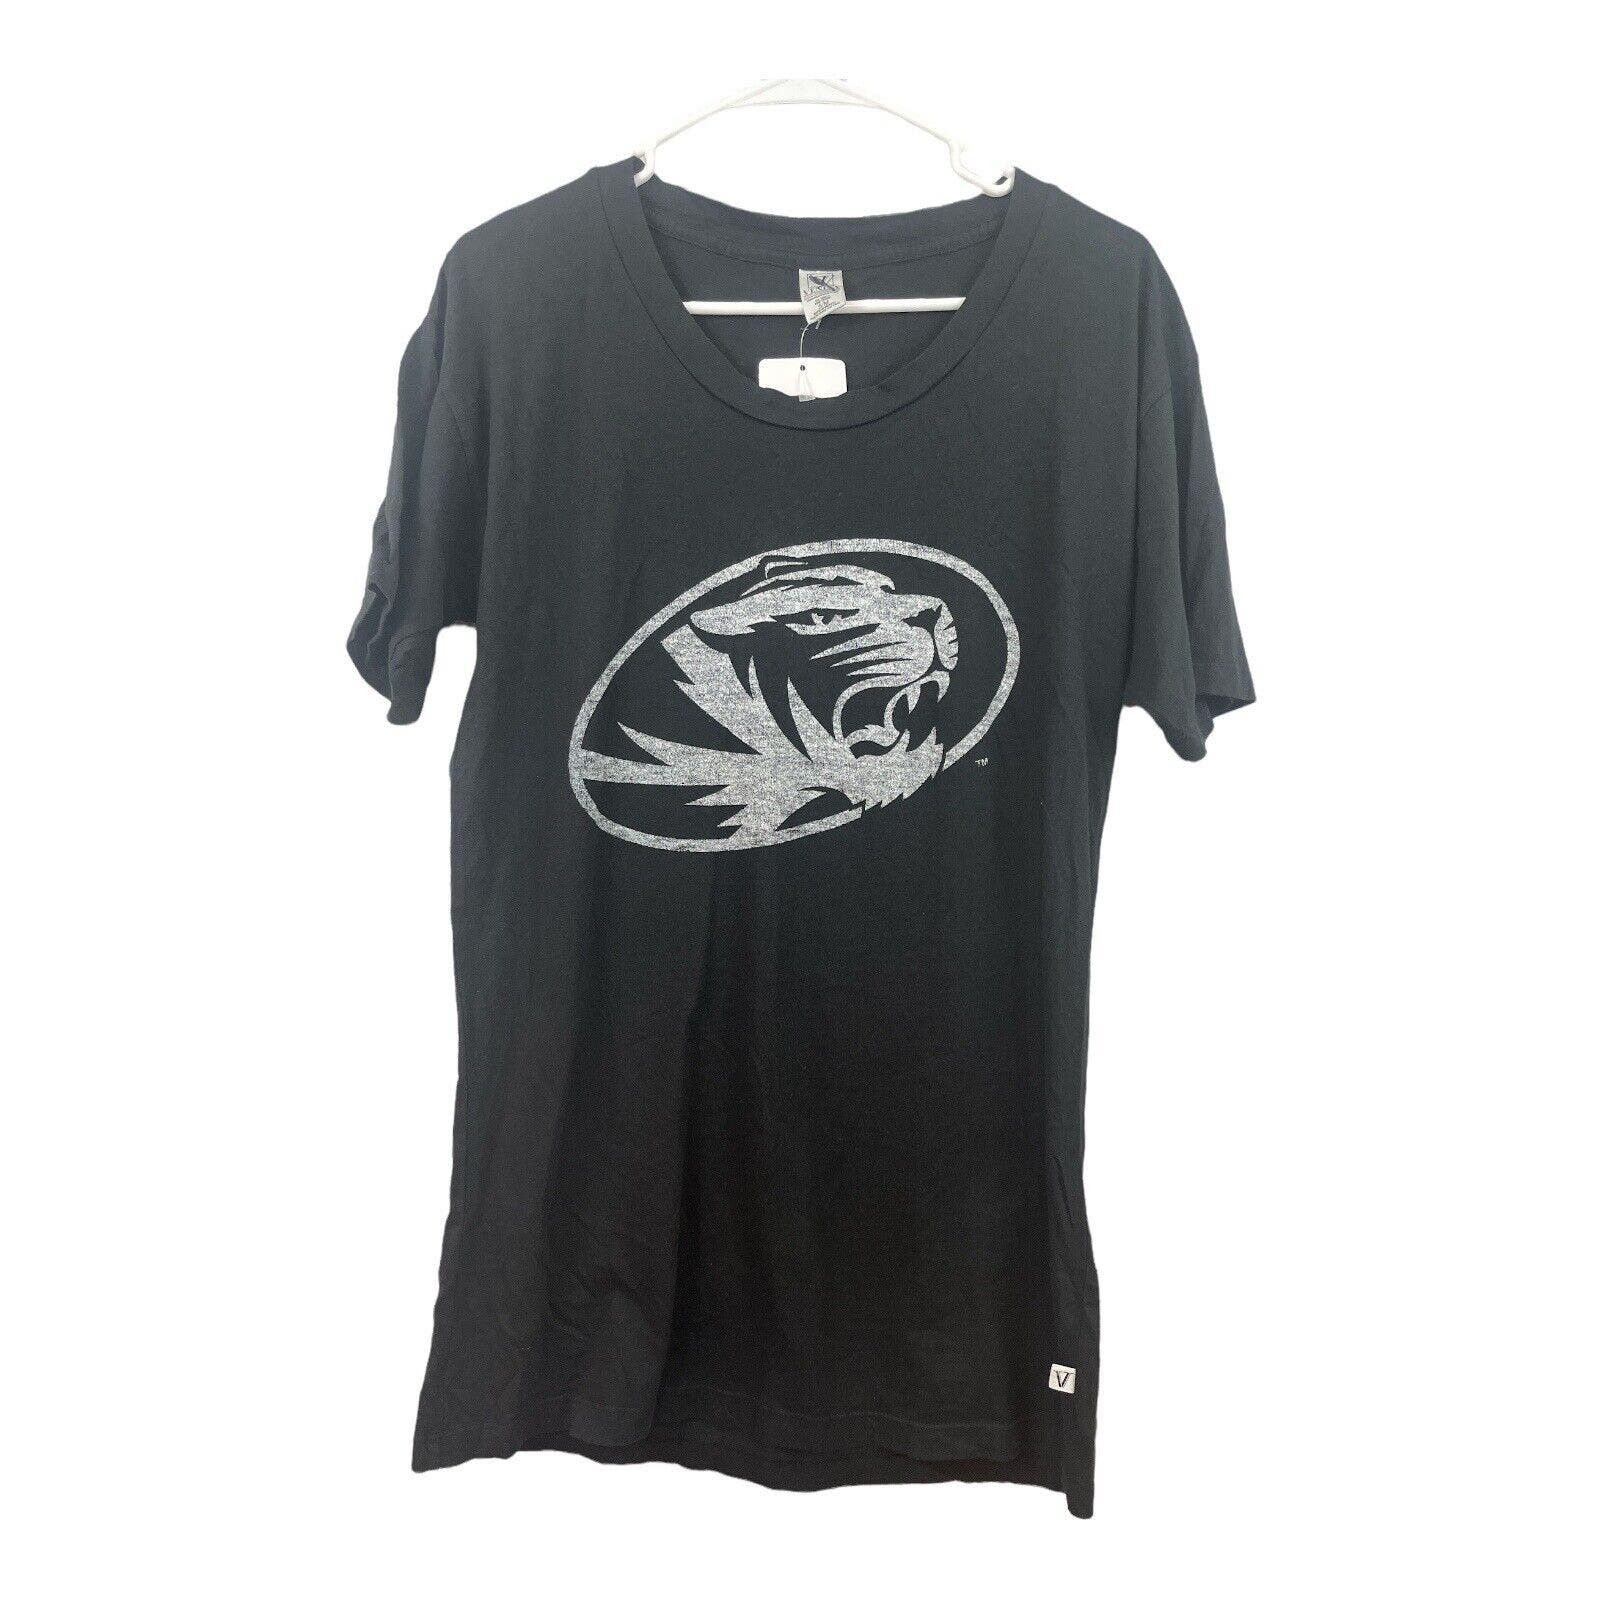 Other Missouri Tigers Black Scoop Neck Short Sleeve Shirt S/M | Grailed